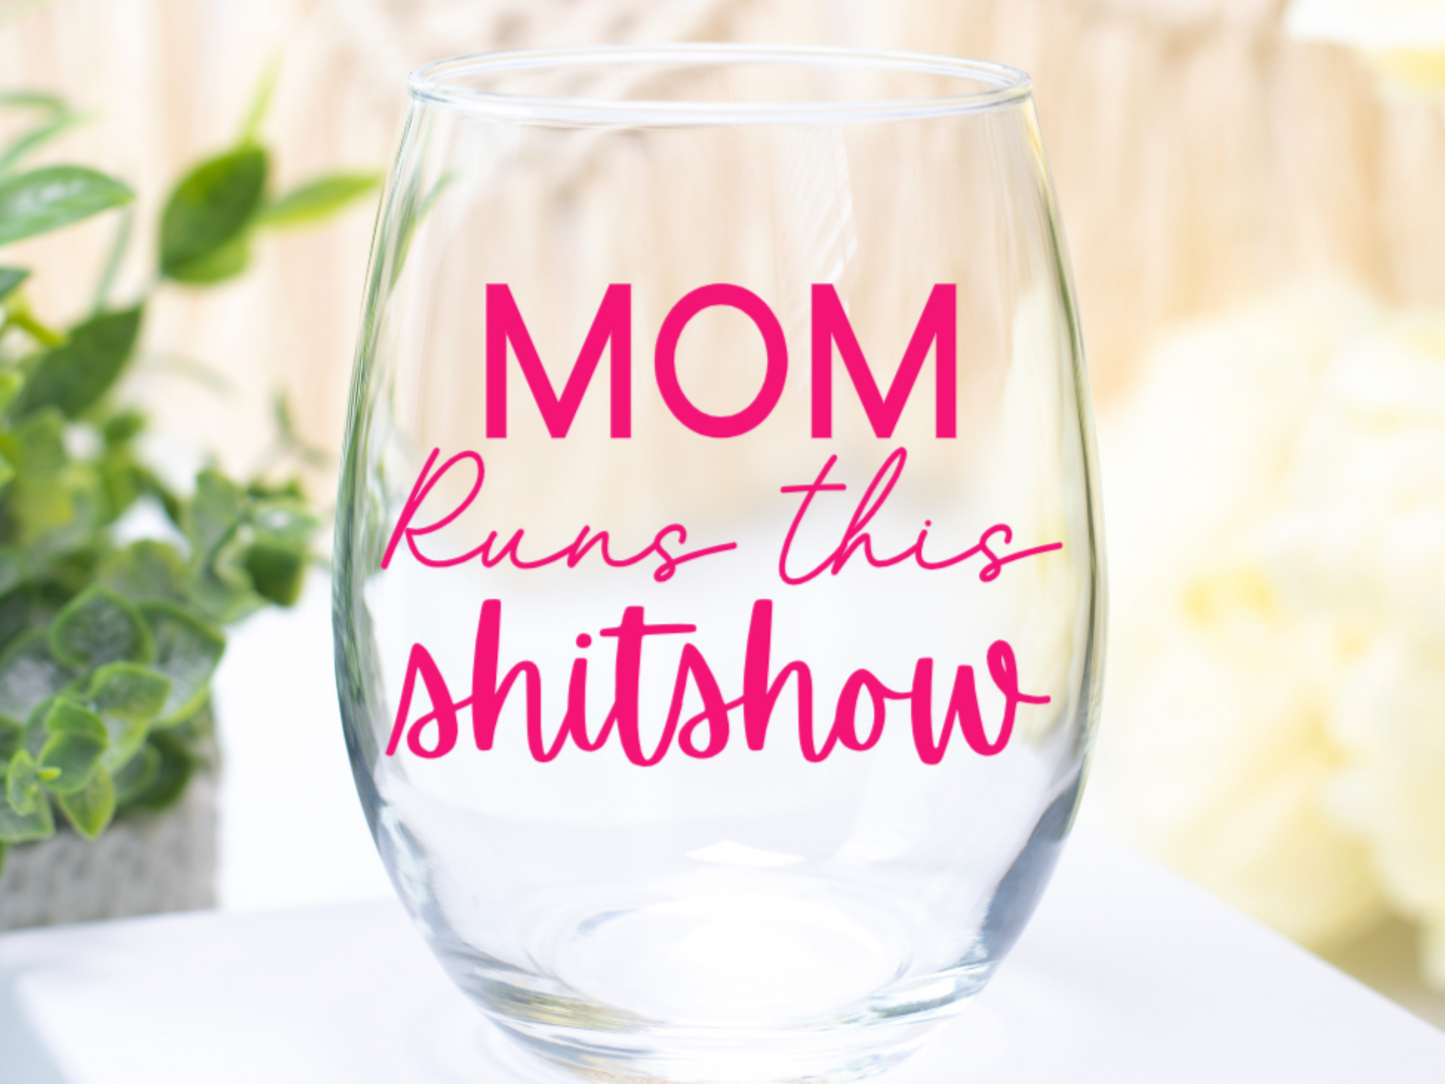 Mom Runs This Shit Show Wine Glass